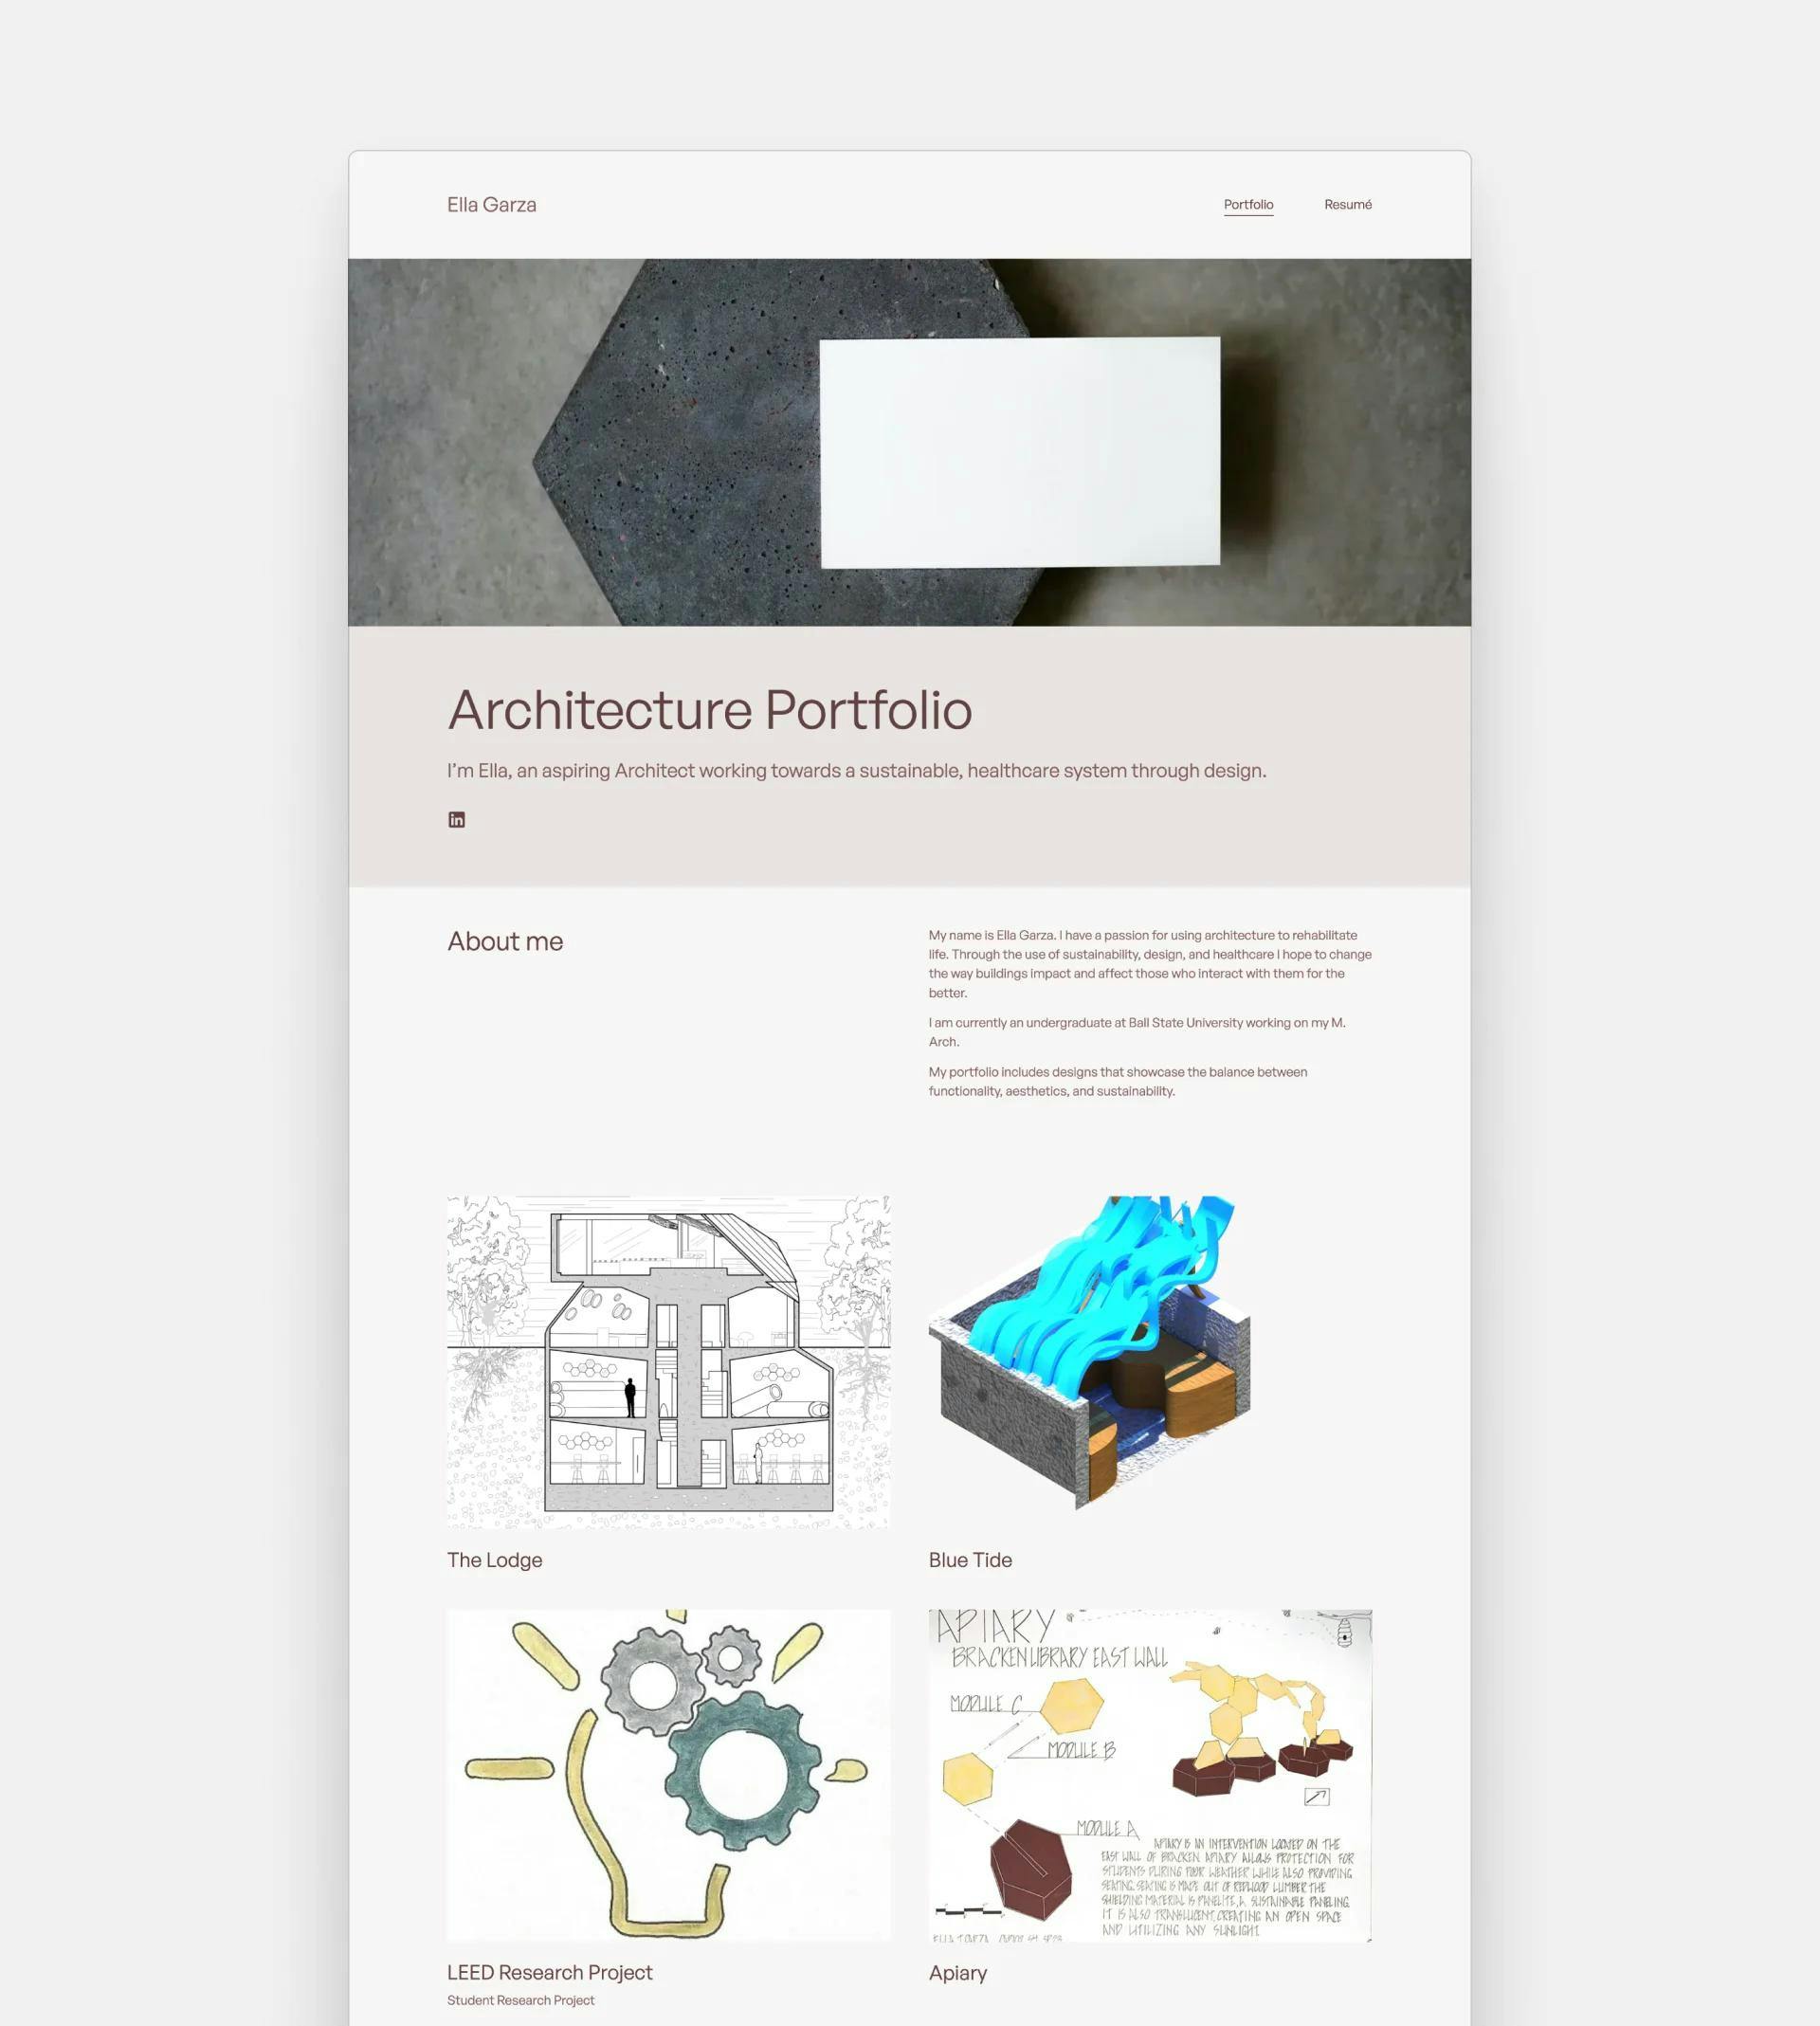 Screenshot of the pastel colored architecture portfolio website by Ella Garza